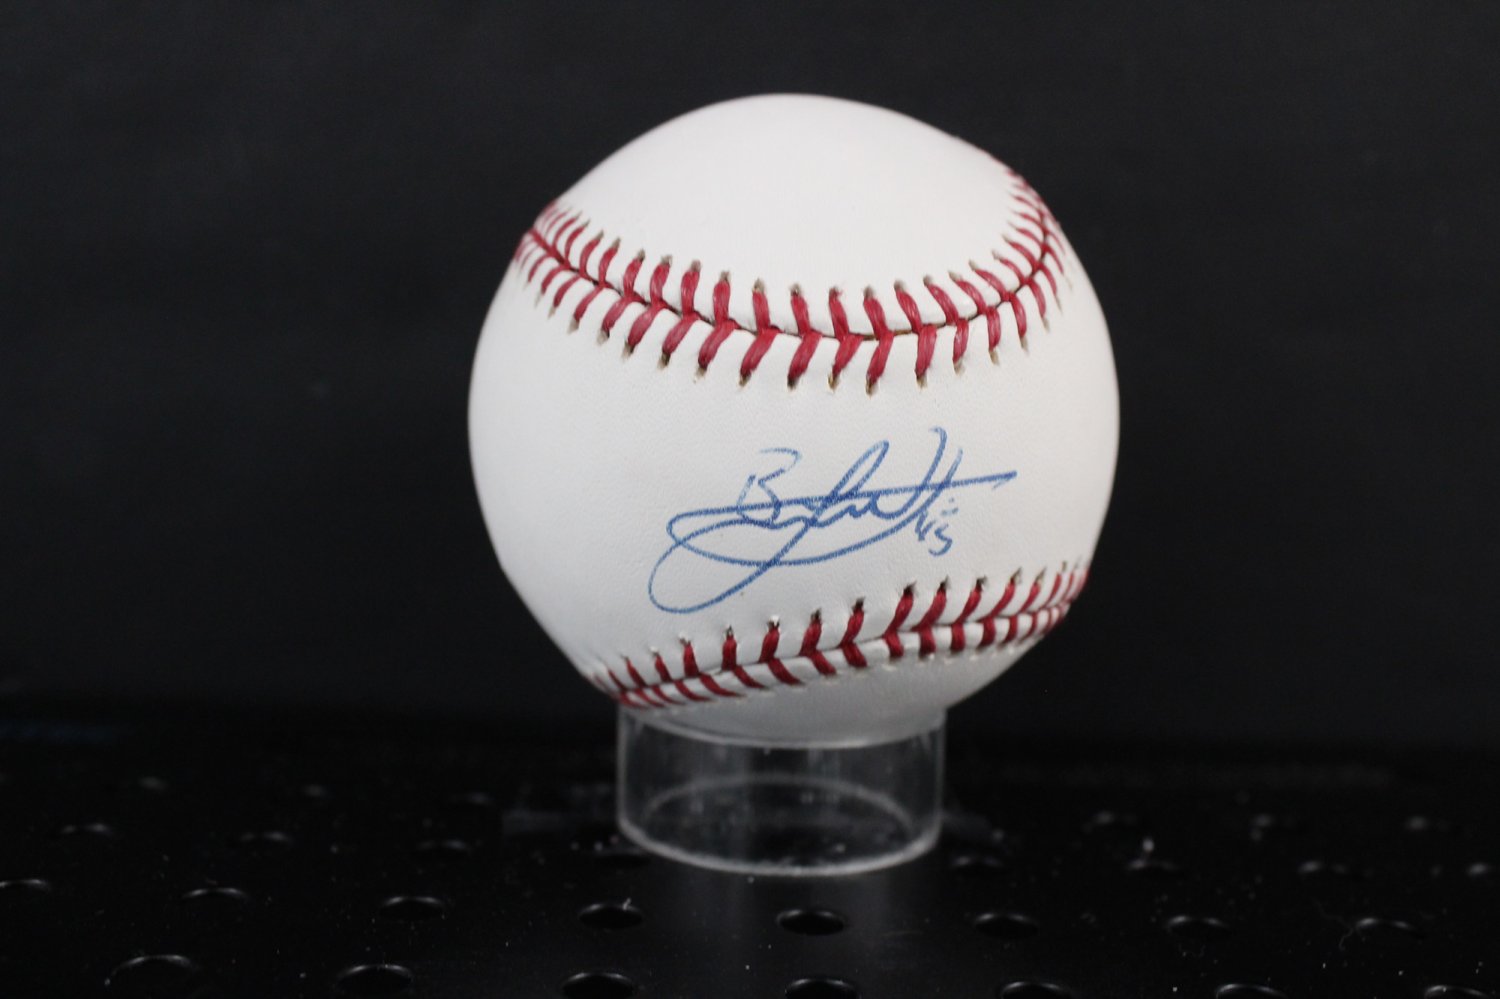 Bobby Jenks Autographed Signed 2005 World Series Baseball Autograph Auto  PSA/DNA